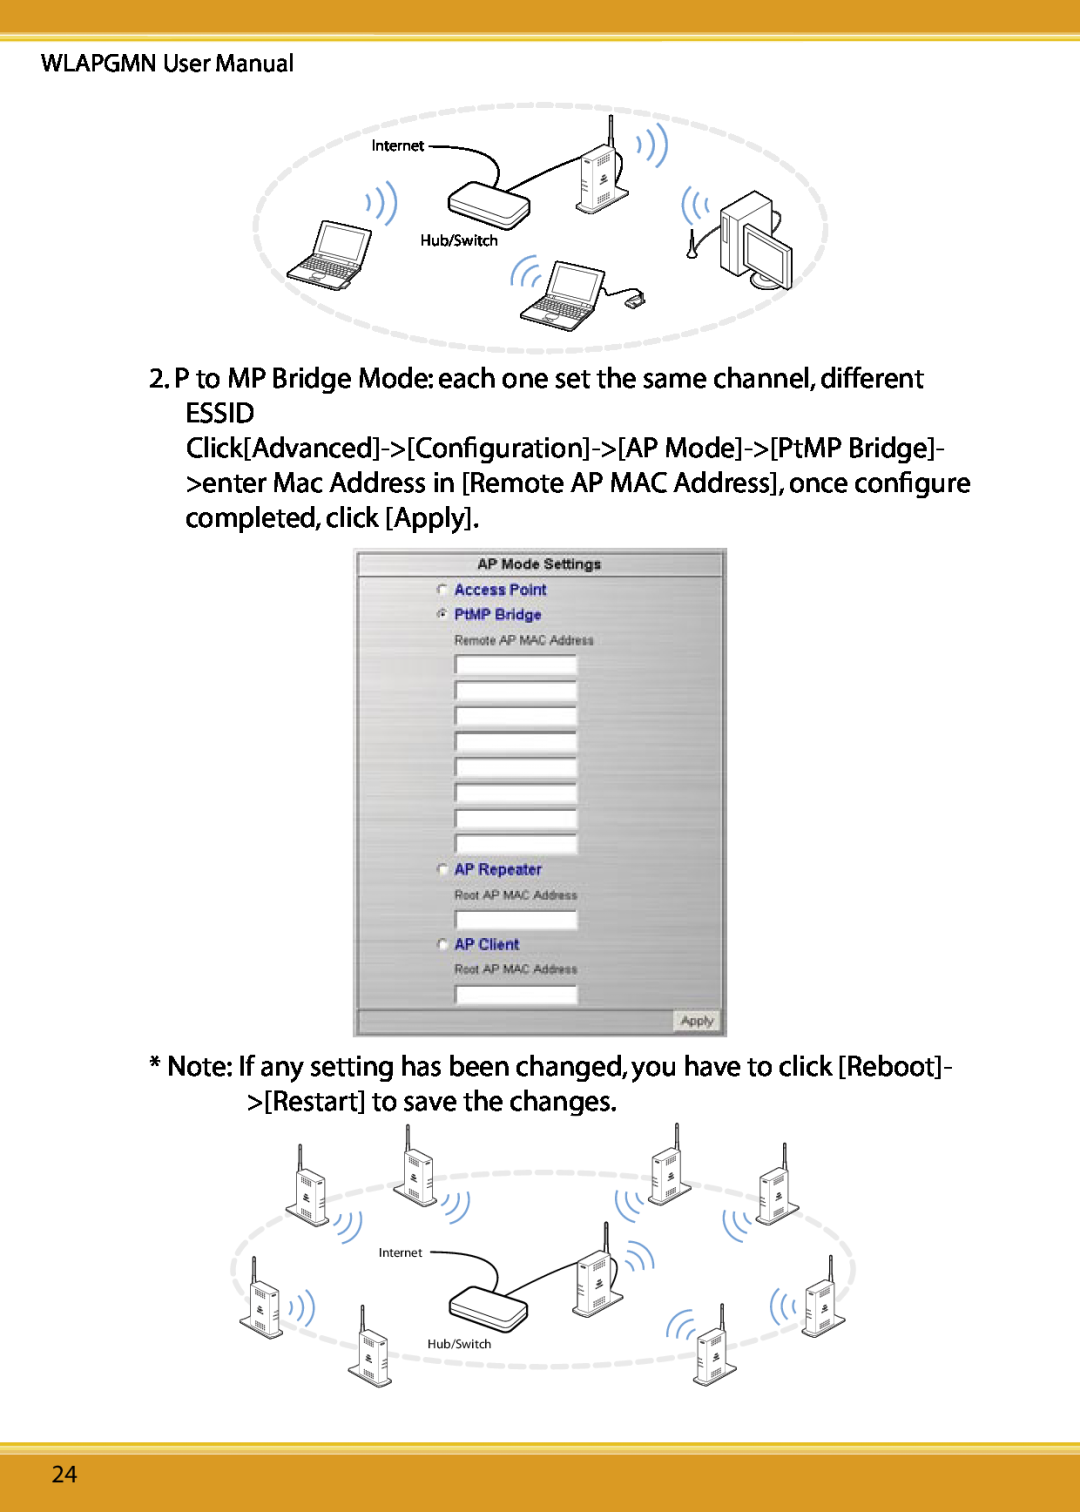 Corega CG-WLAPGMN user manual Internet Hub/Switch 